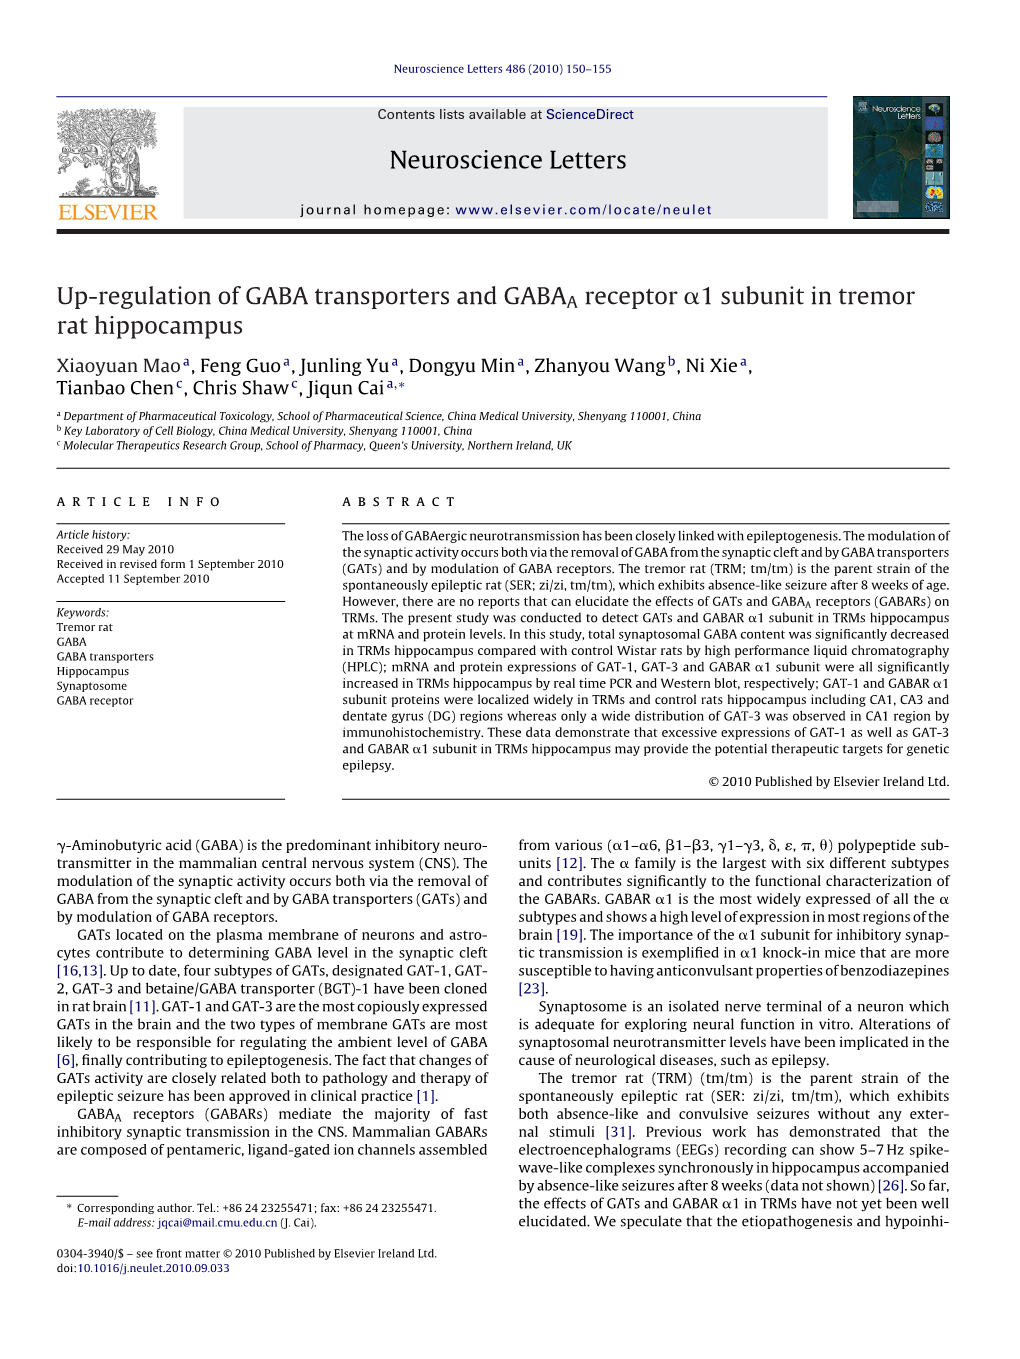 Up-Regulation of GABA Transporters and GABAA Receptor Î±1 Subunit In